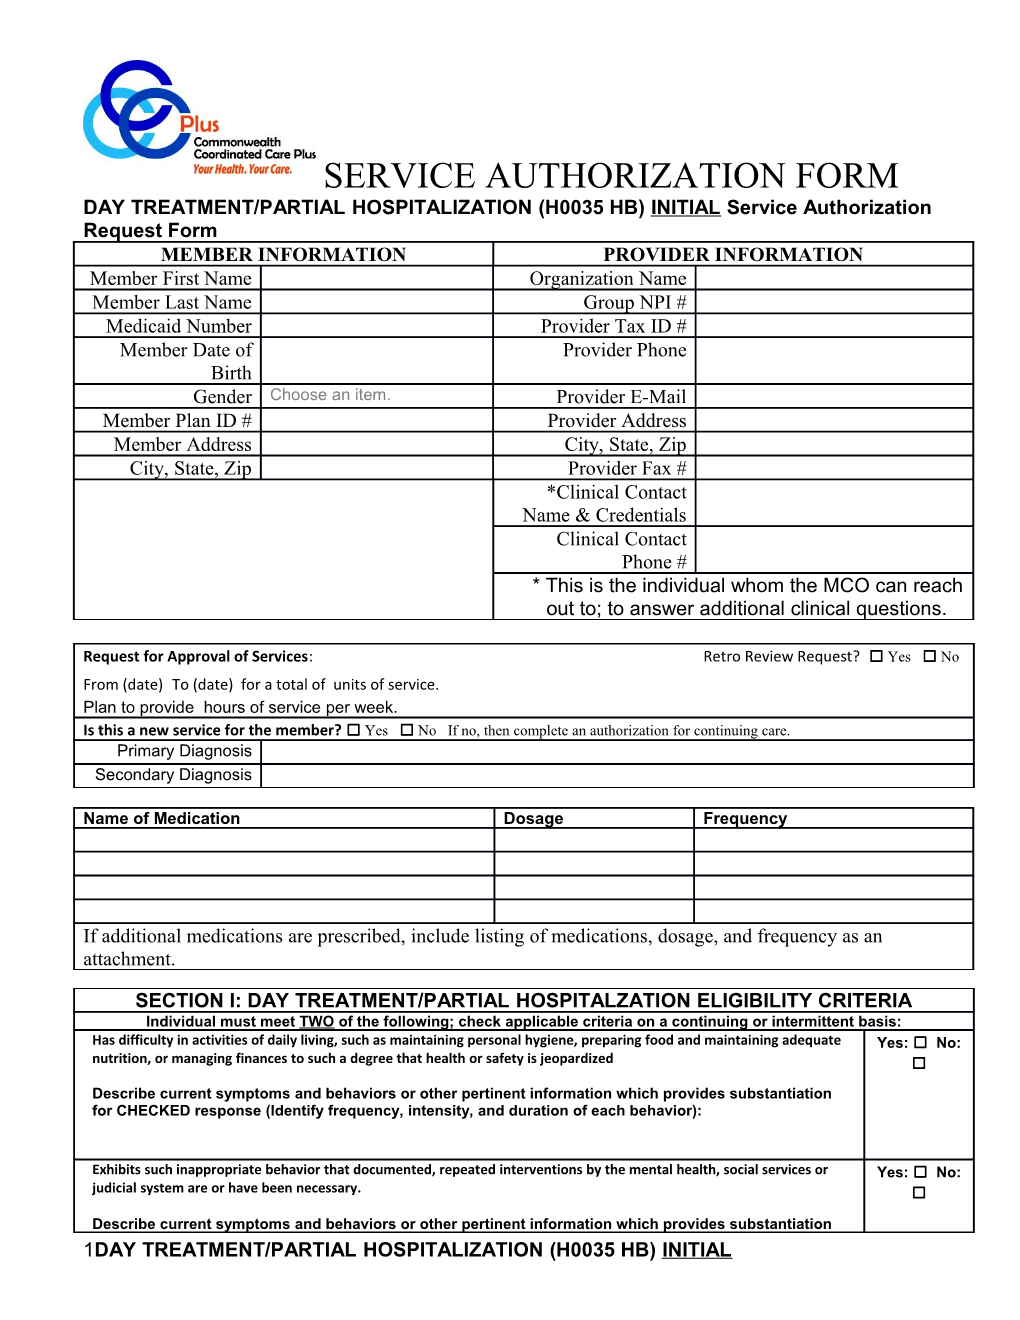 DAY TREATMENT/PARTIAL HOSPITALIZATION (H0035 HB)Initialservice Authorization Request Form